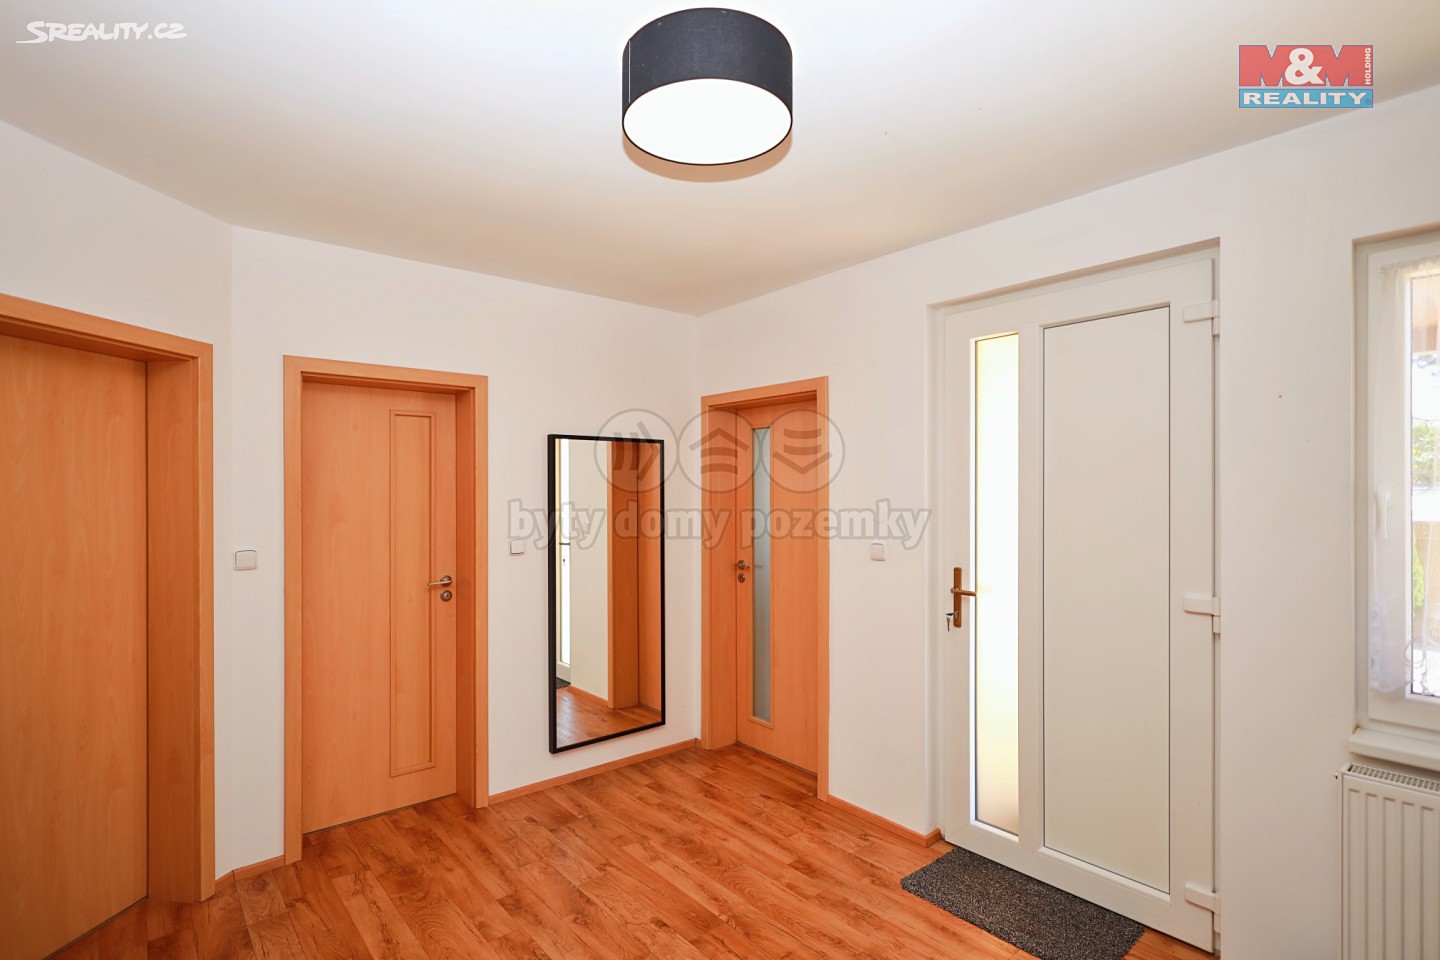 Prodej  rodinného domu 98 m², pozemek 138 m², Jihlava - Popice, okres Jihlava